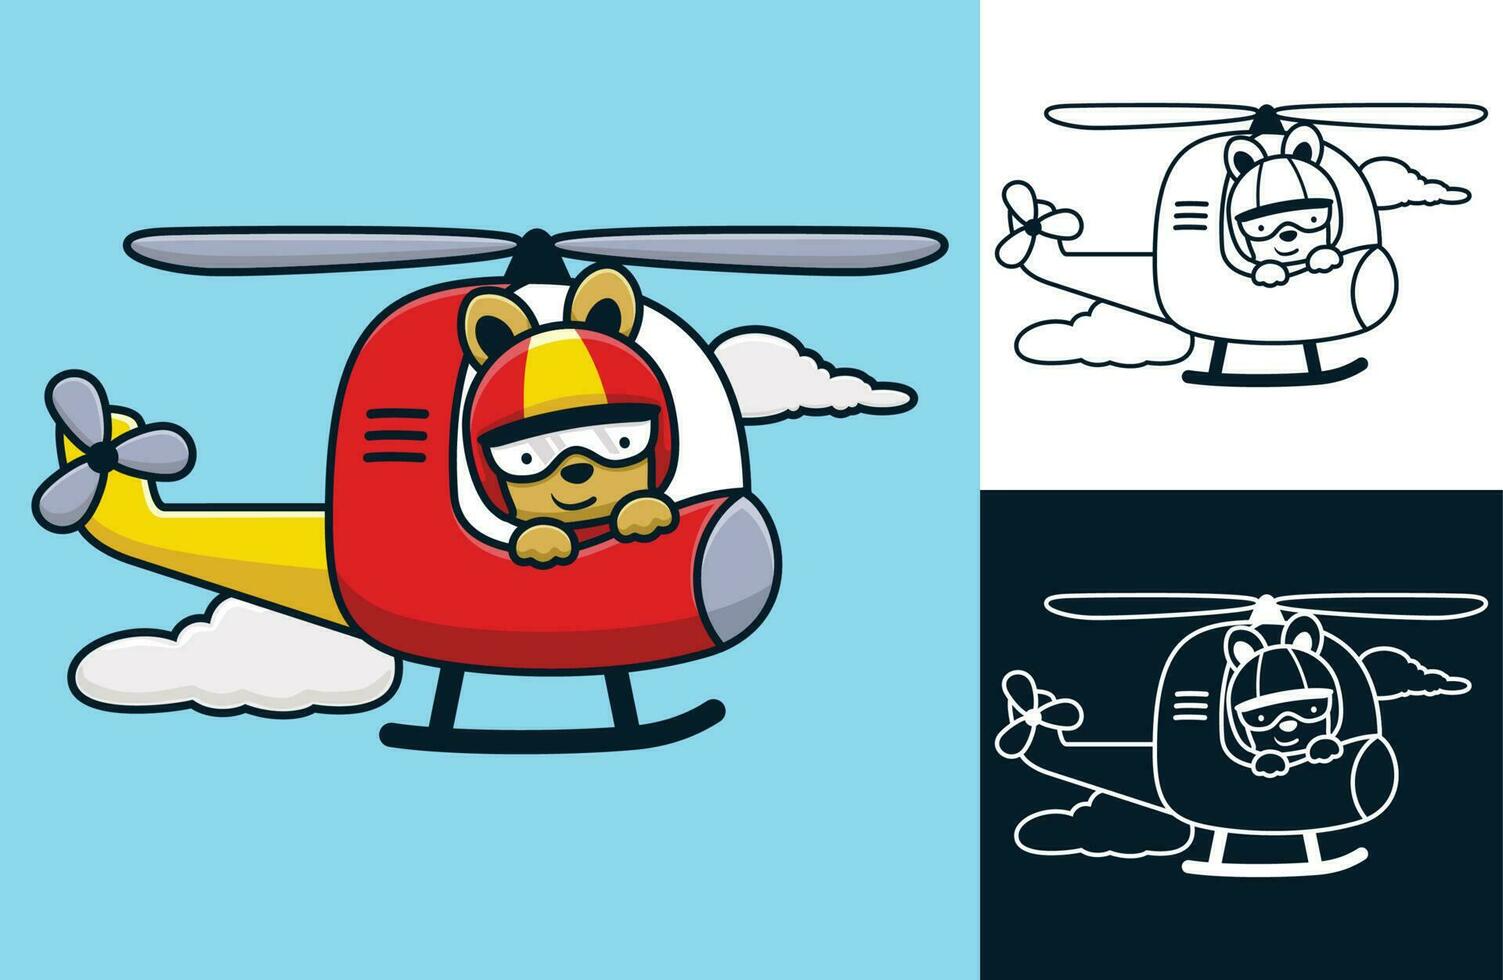 Rabbit wearing pilot helmet on helicopter. Vector cartoon illustration in flat icon style